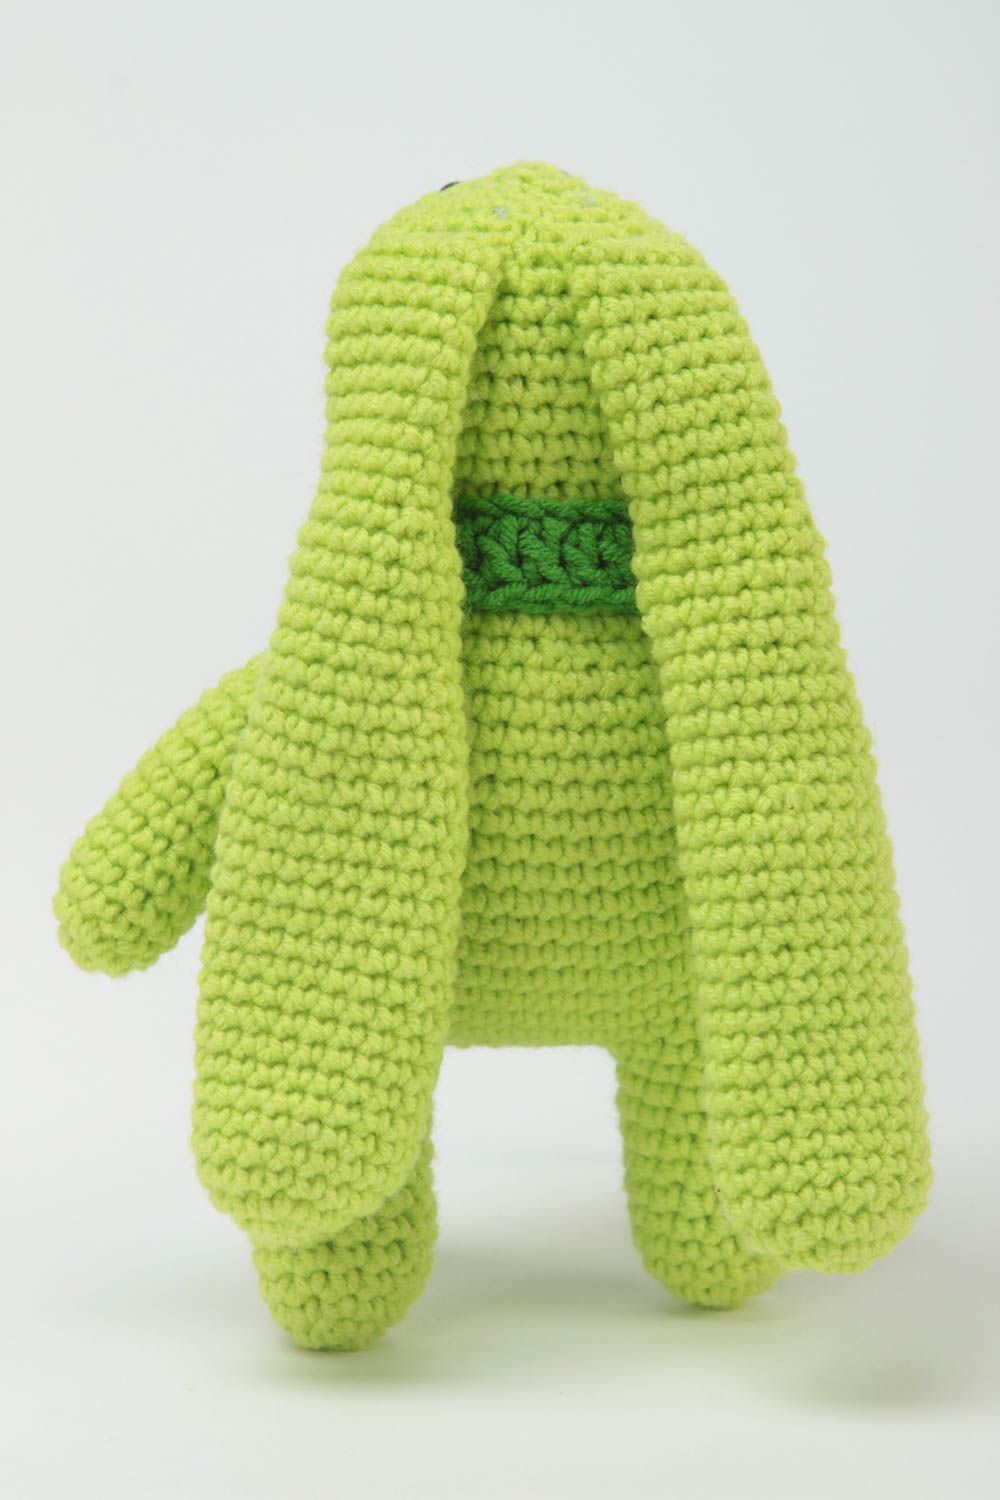 Unusual handmade crochet toy soft childrens toys nursery design gift ideas photo 4